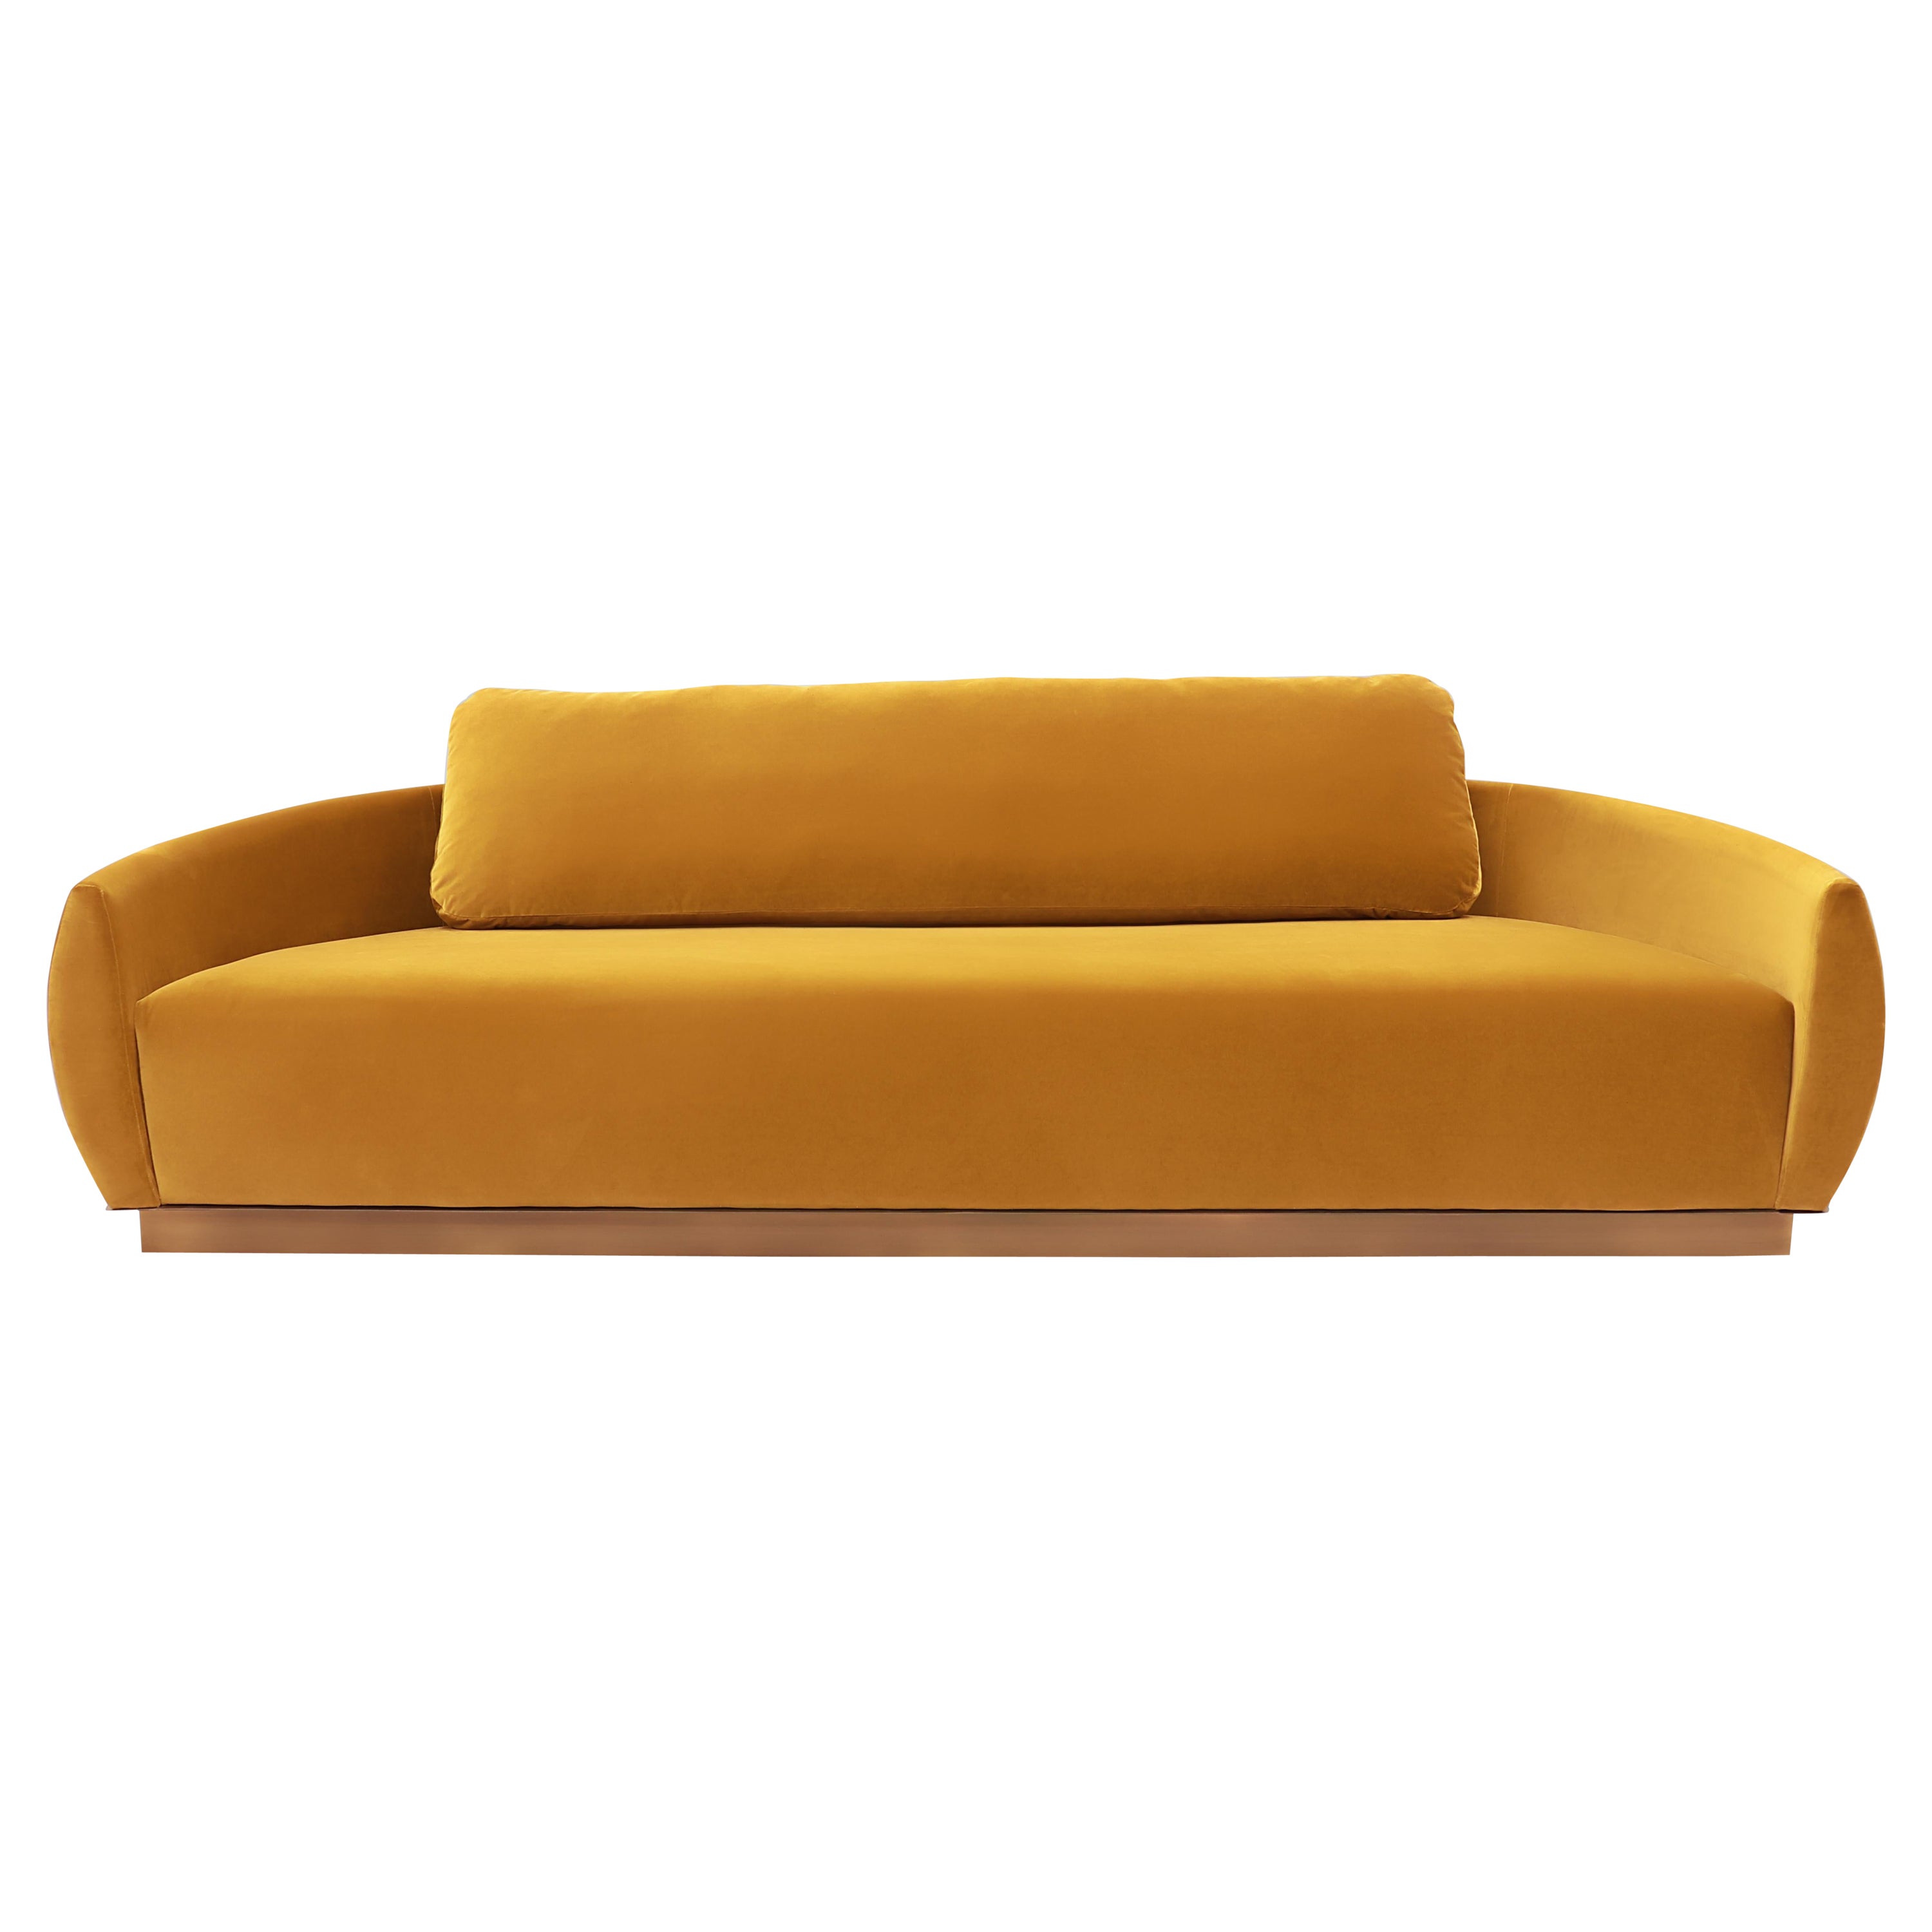 Eier-Sofa von Atra Design